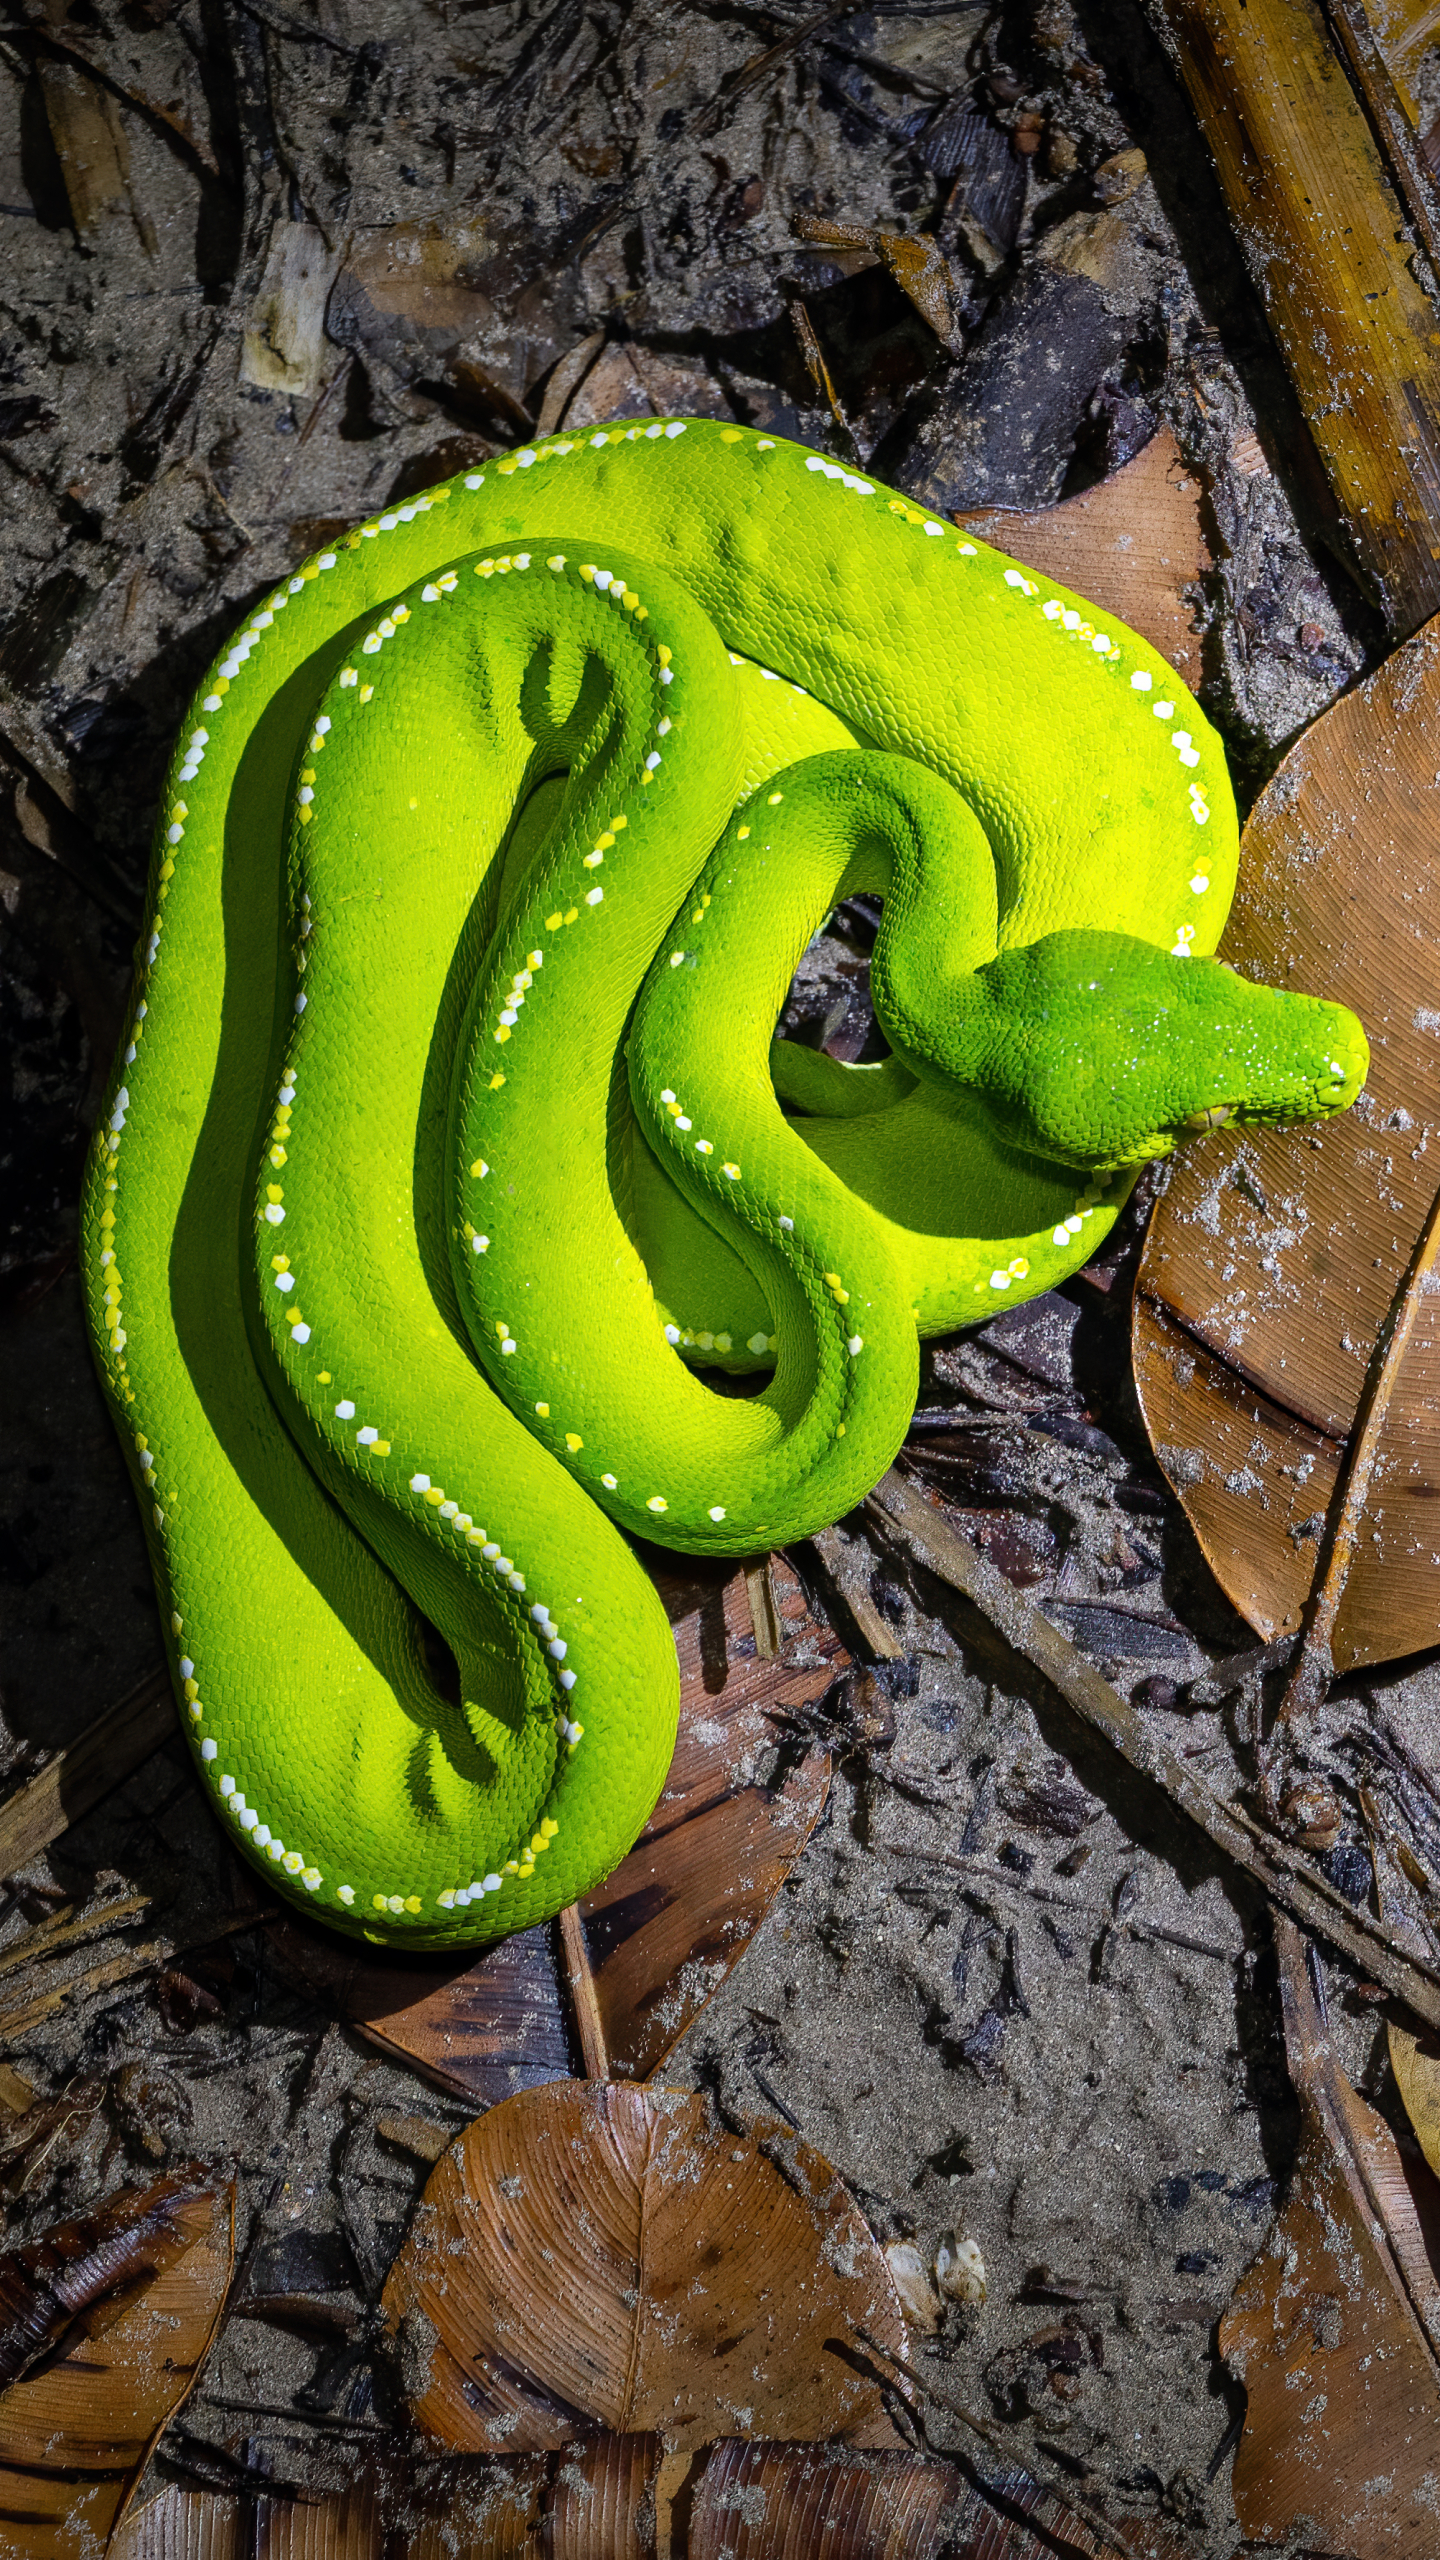 Green tree python (Morelia viridis ssp. shireenae) - Lockhart, Queensland, Australia by JJ Harrison